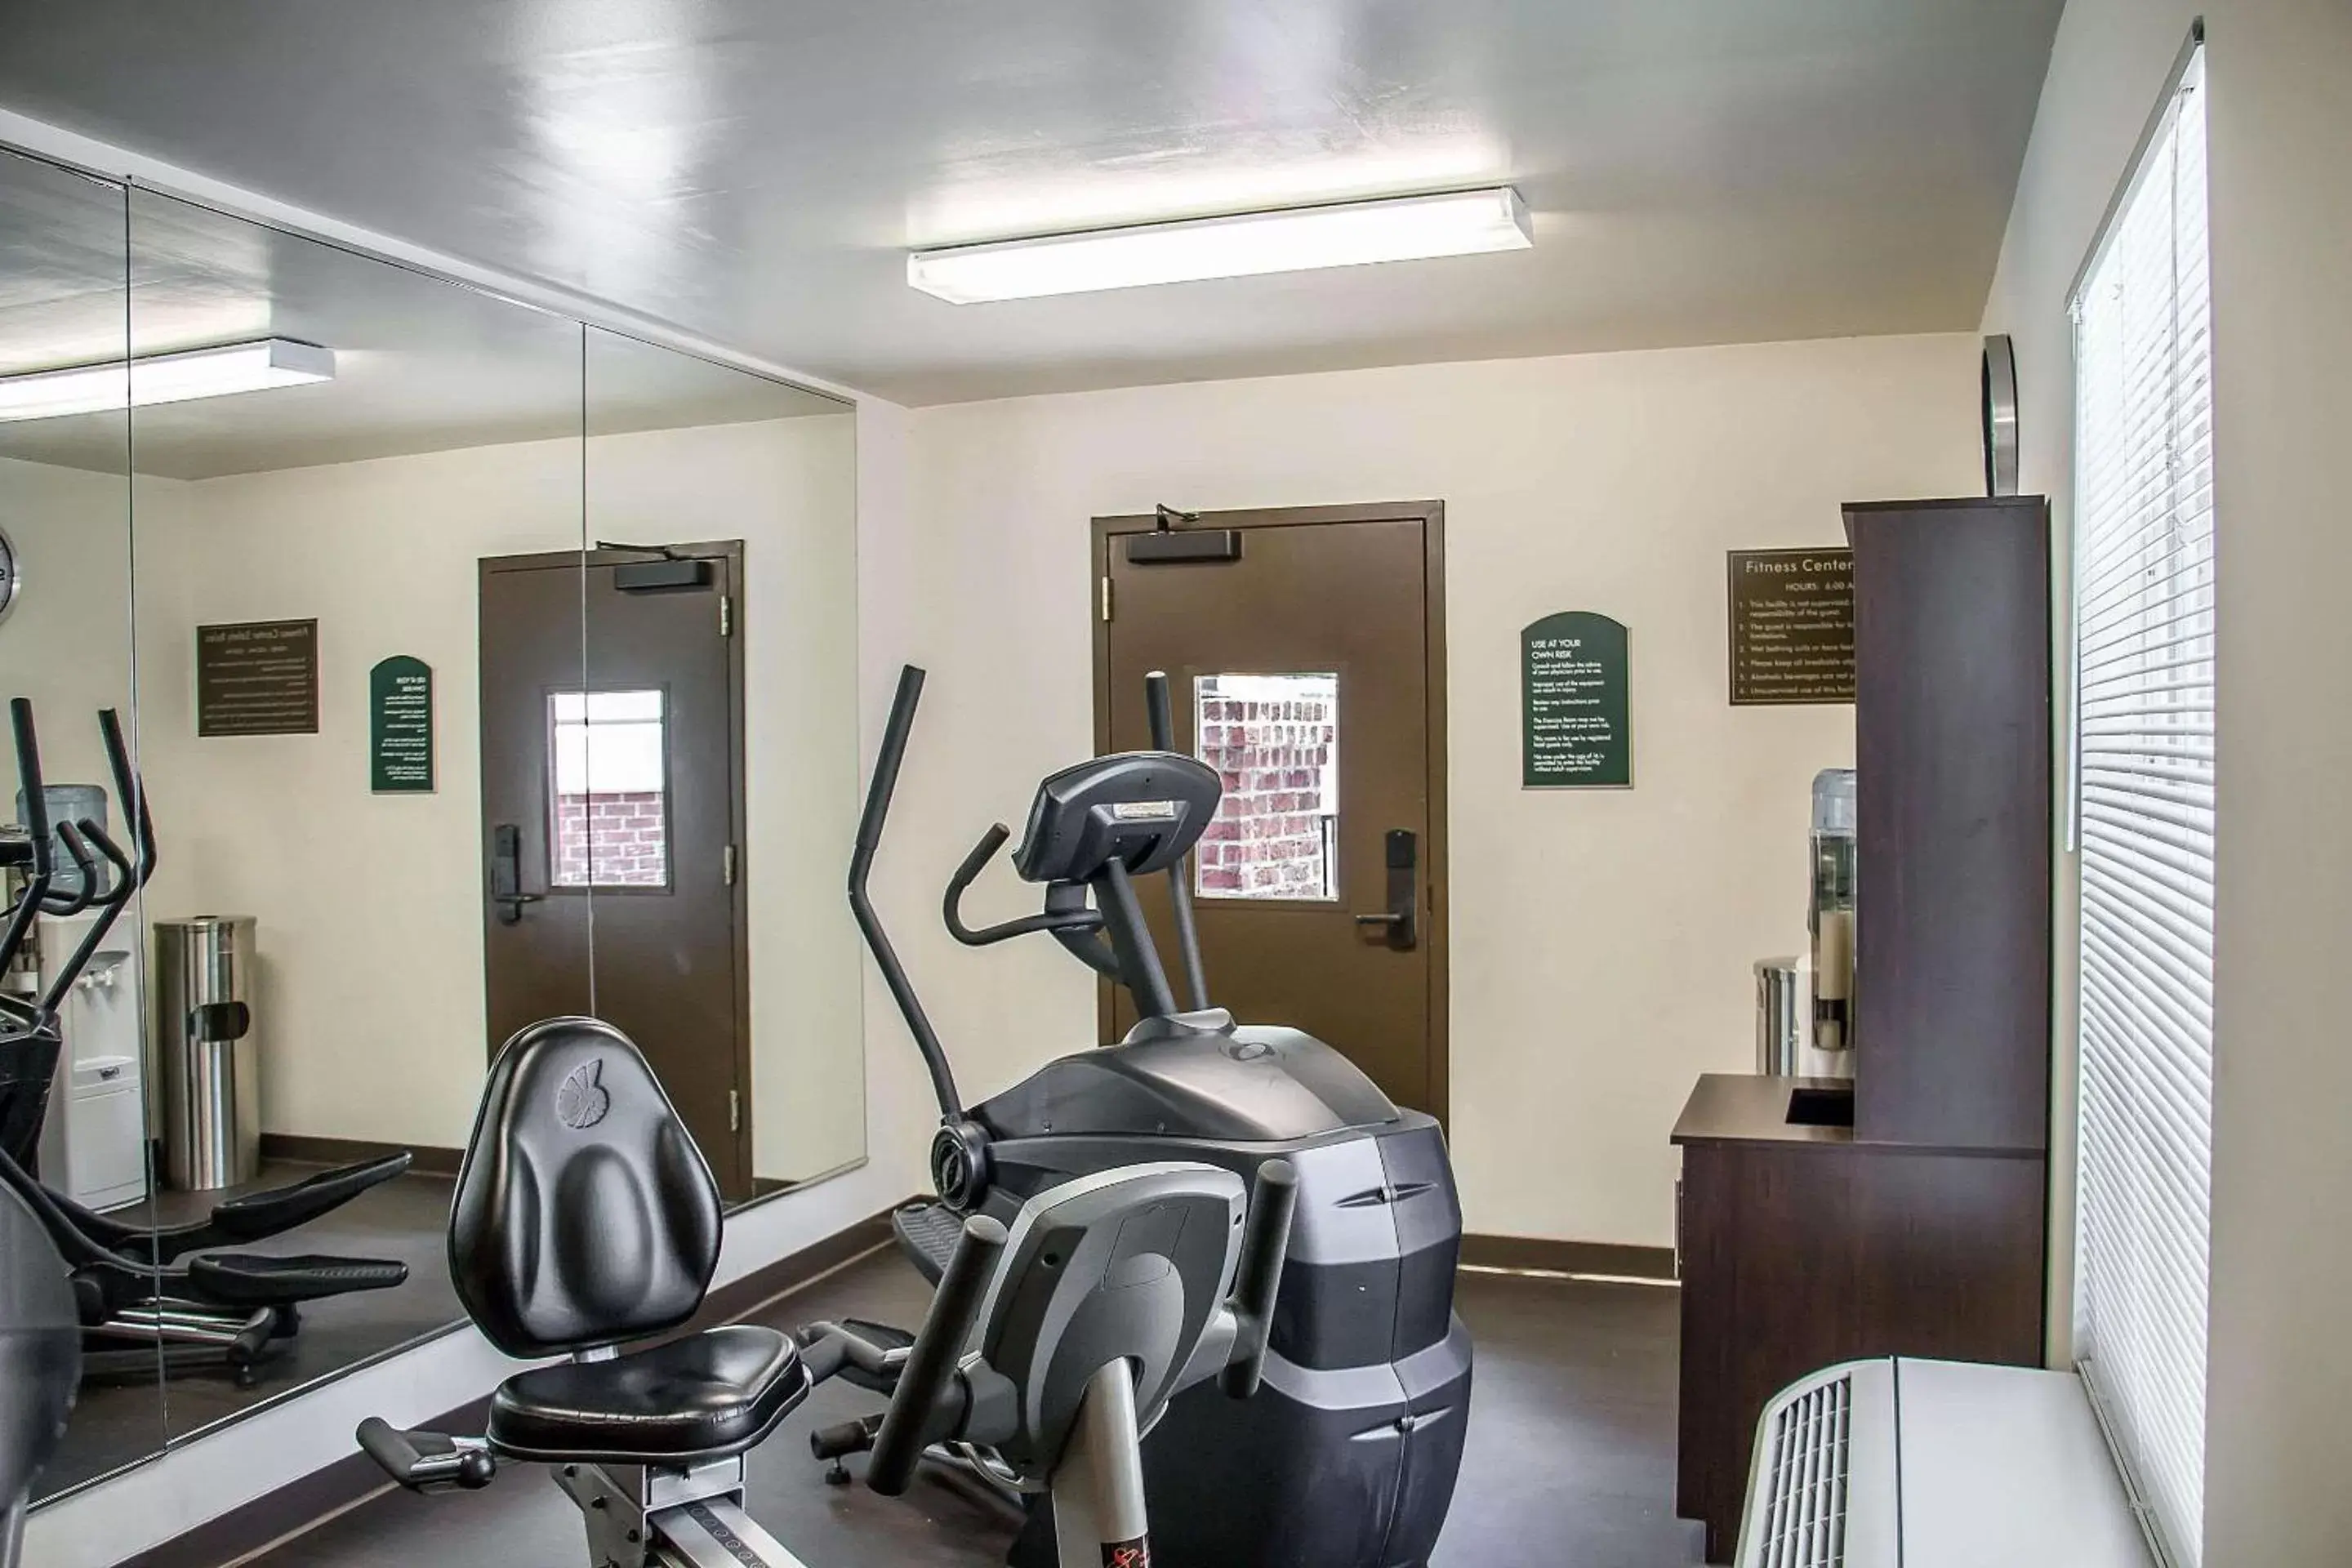 Fitness centre/facilities, Fitness Center/Facilities in Comfort Suites Bluffton-Hilton Head Island